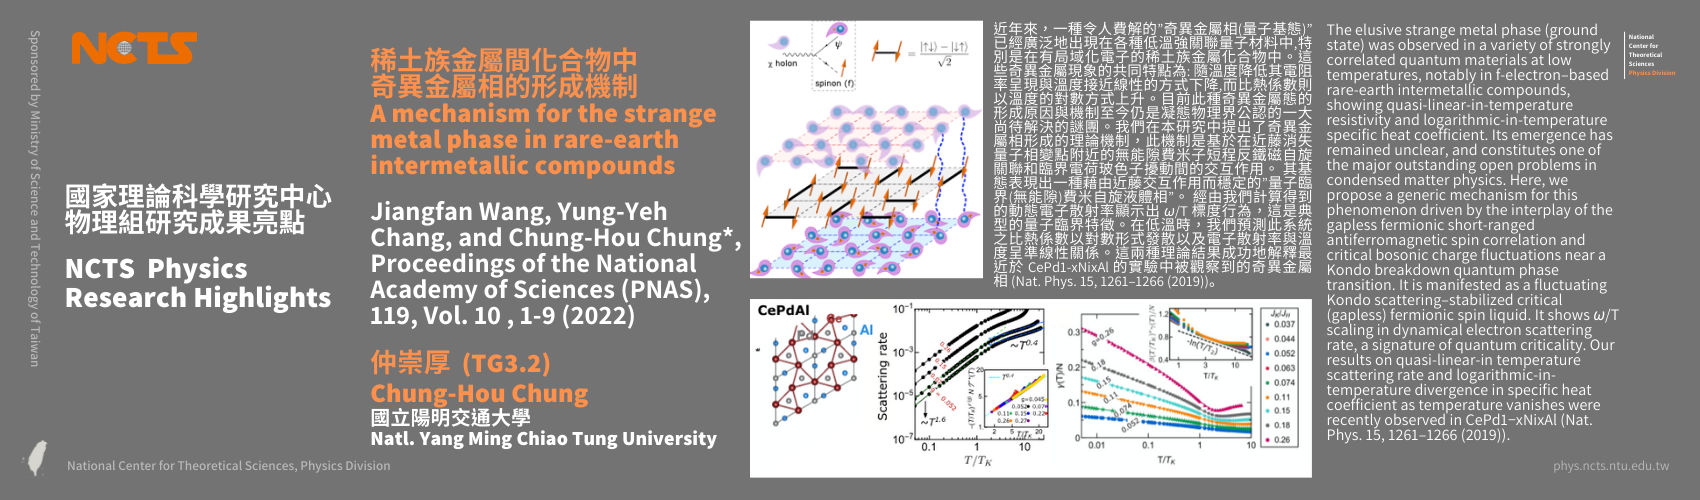 NCTS Physics Research Highlights - Chung-Hou Chung 